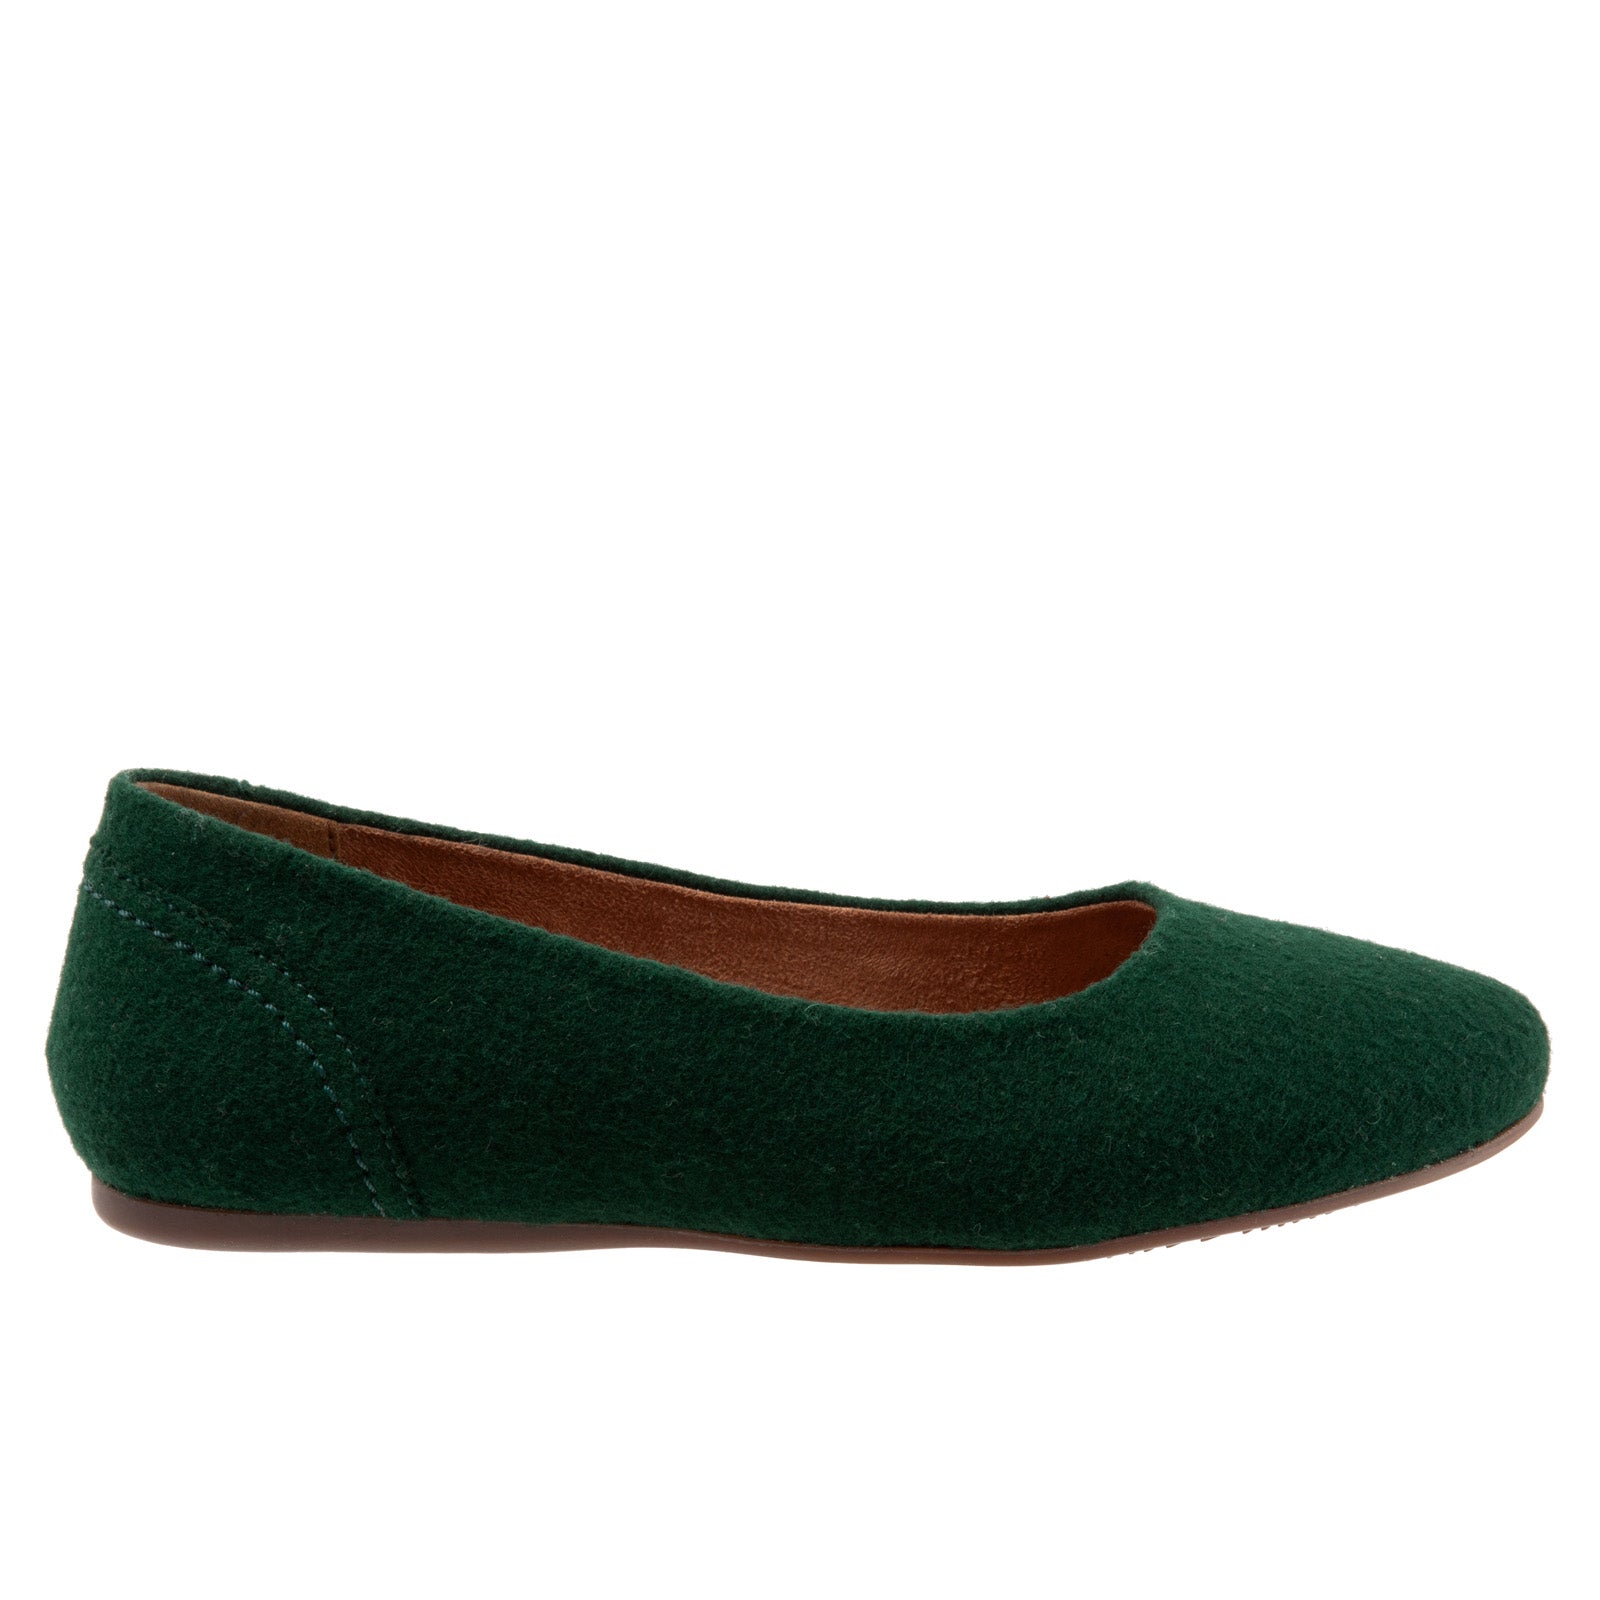 Softwalk Shiraz S2160-335 Womens Green Suede Slip On Ballet Flats Shoes